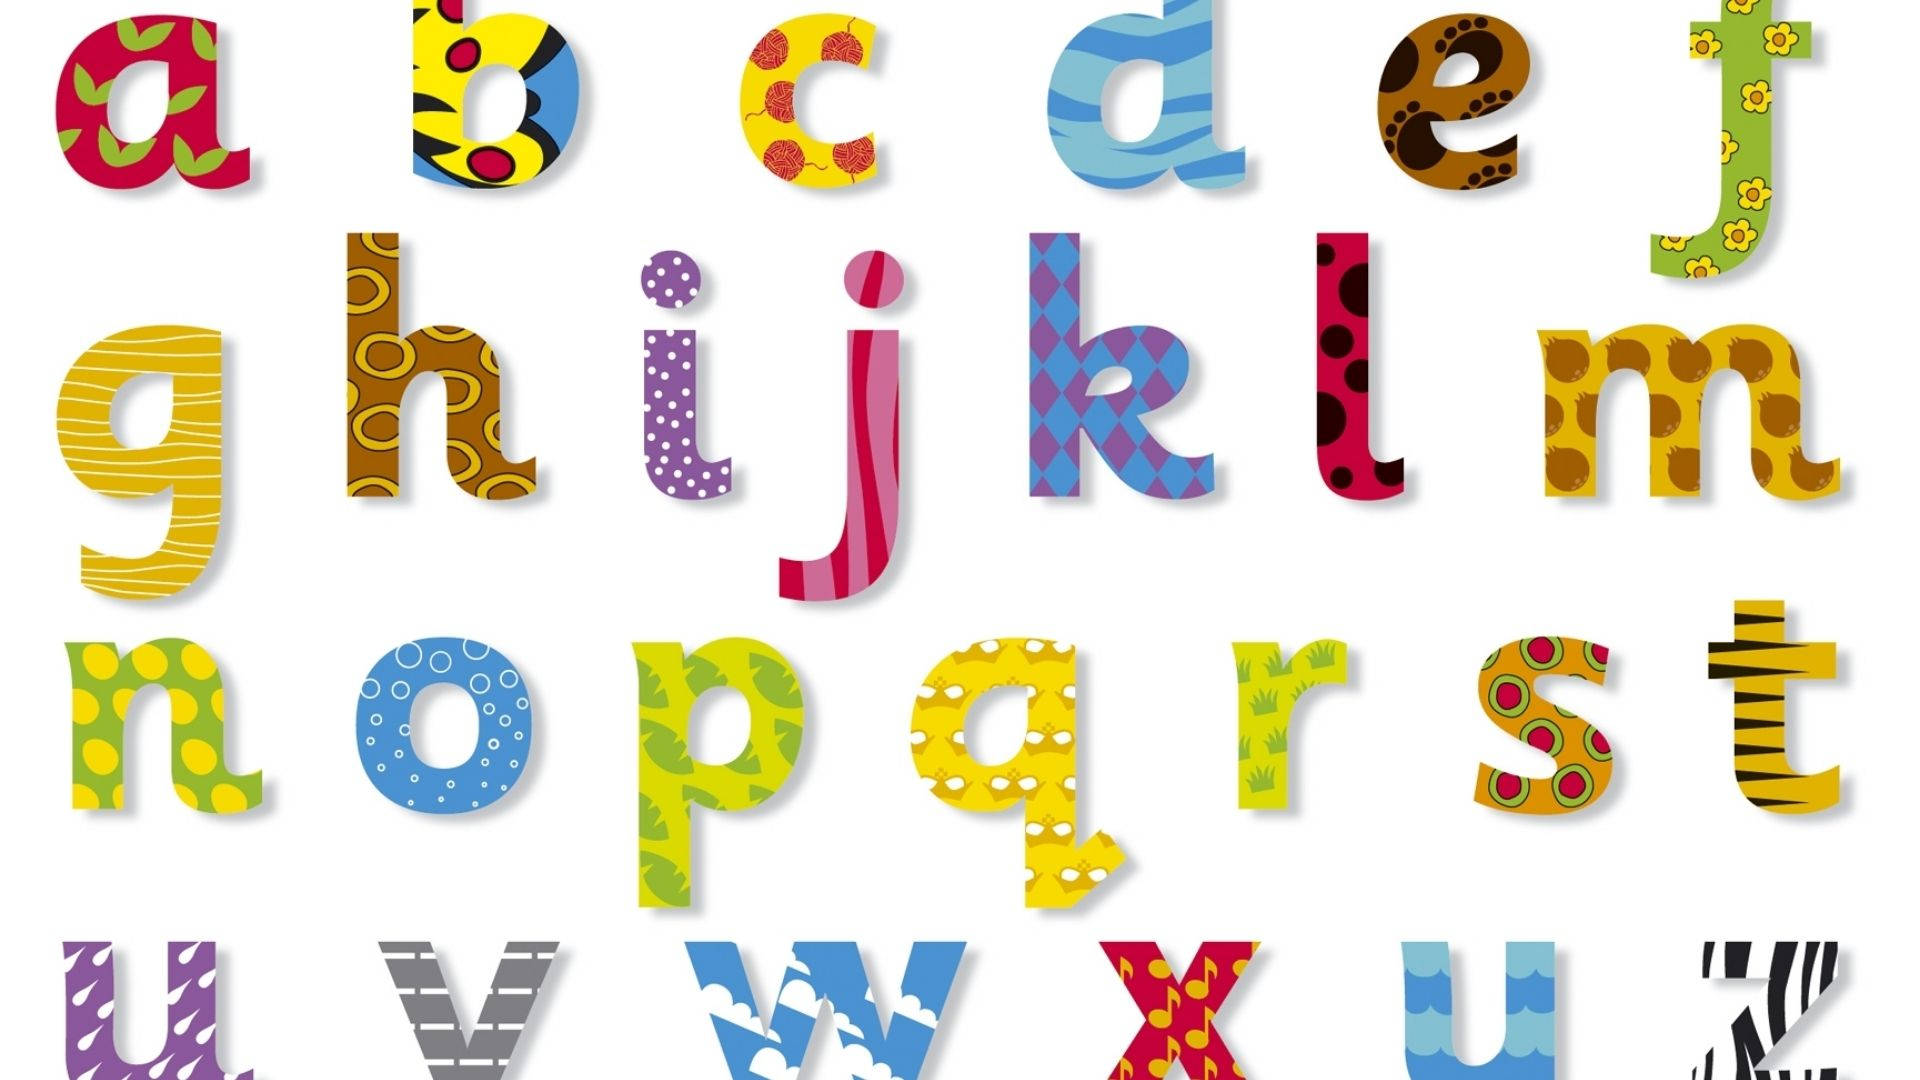 Caption: Vibrant Alphabetical Design Wallpaper